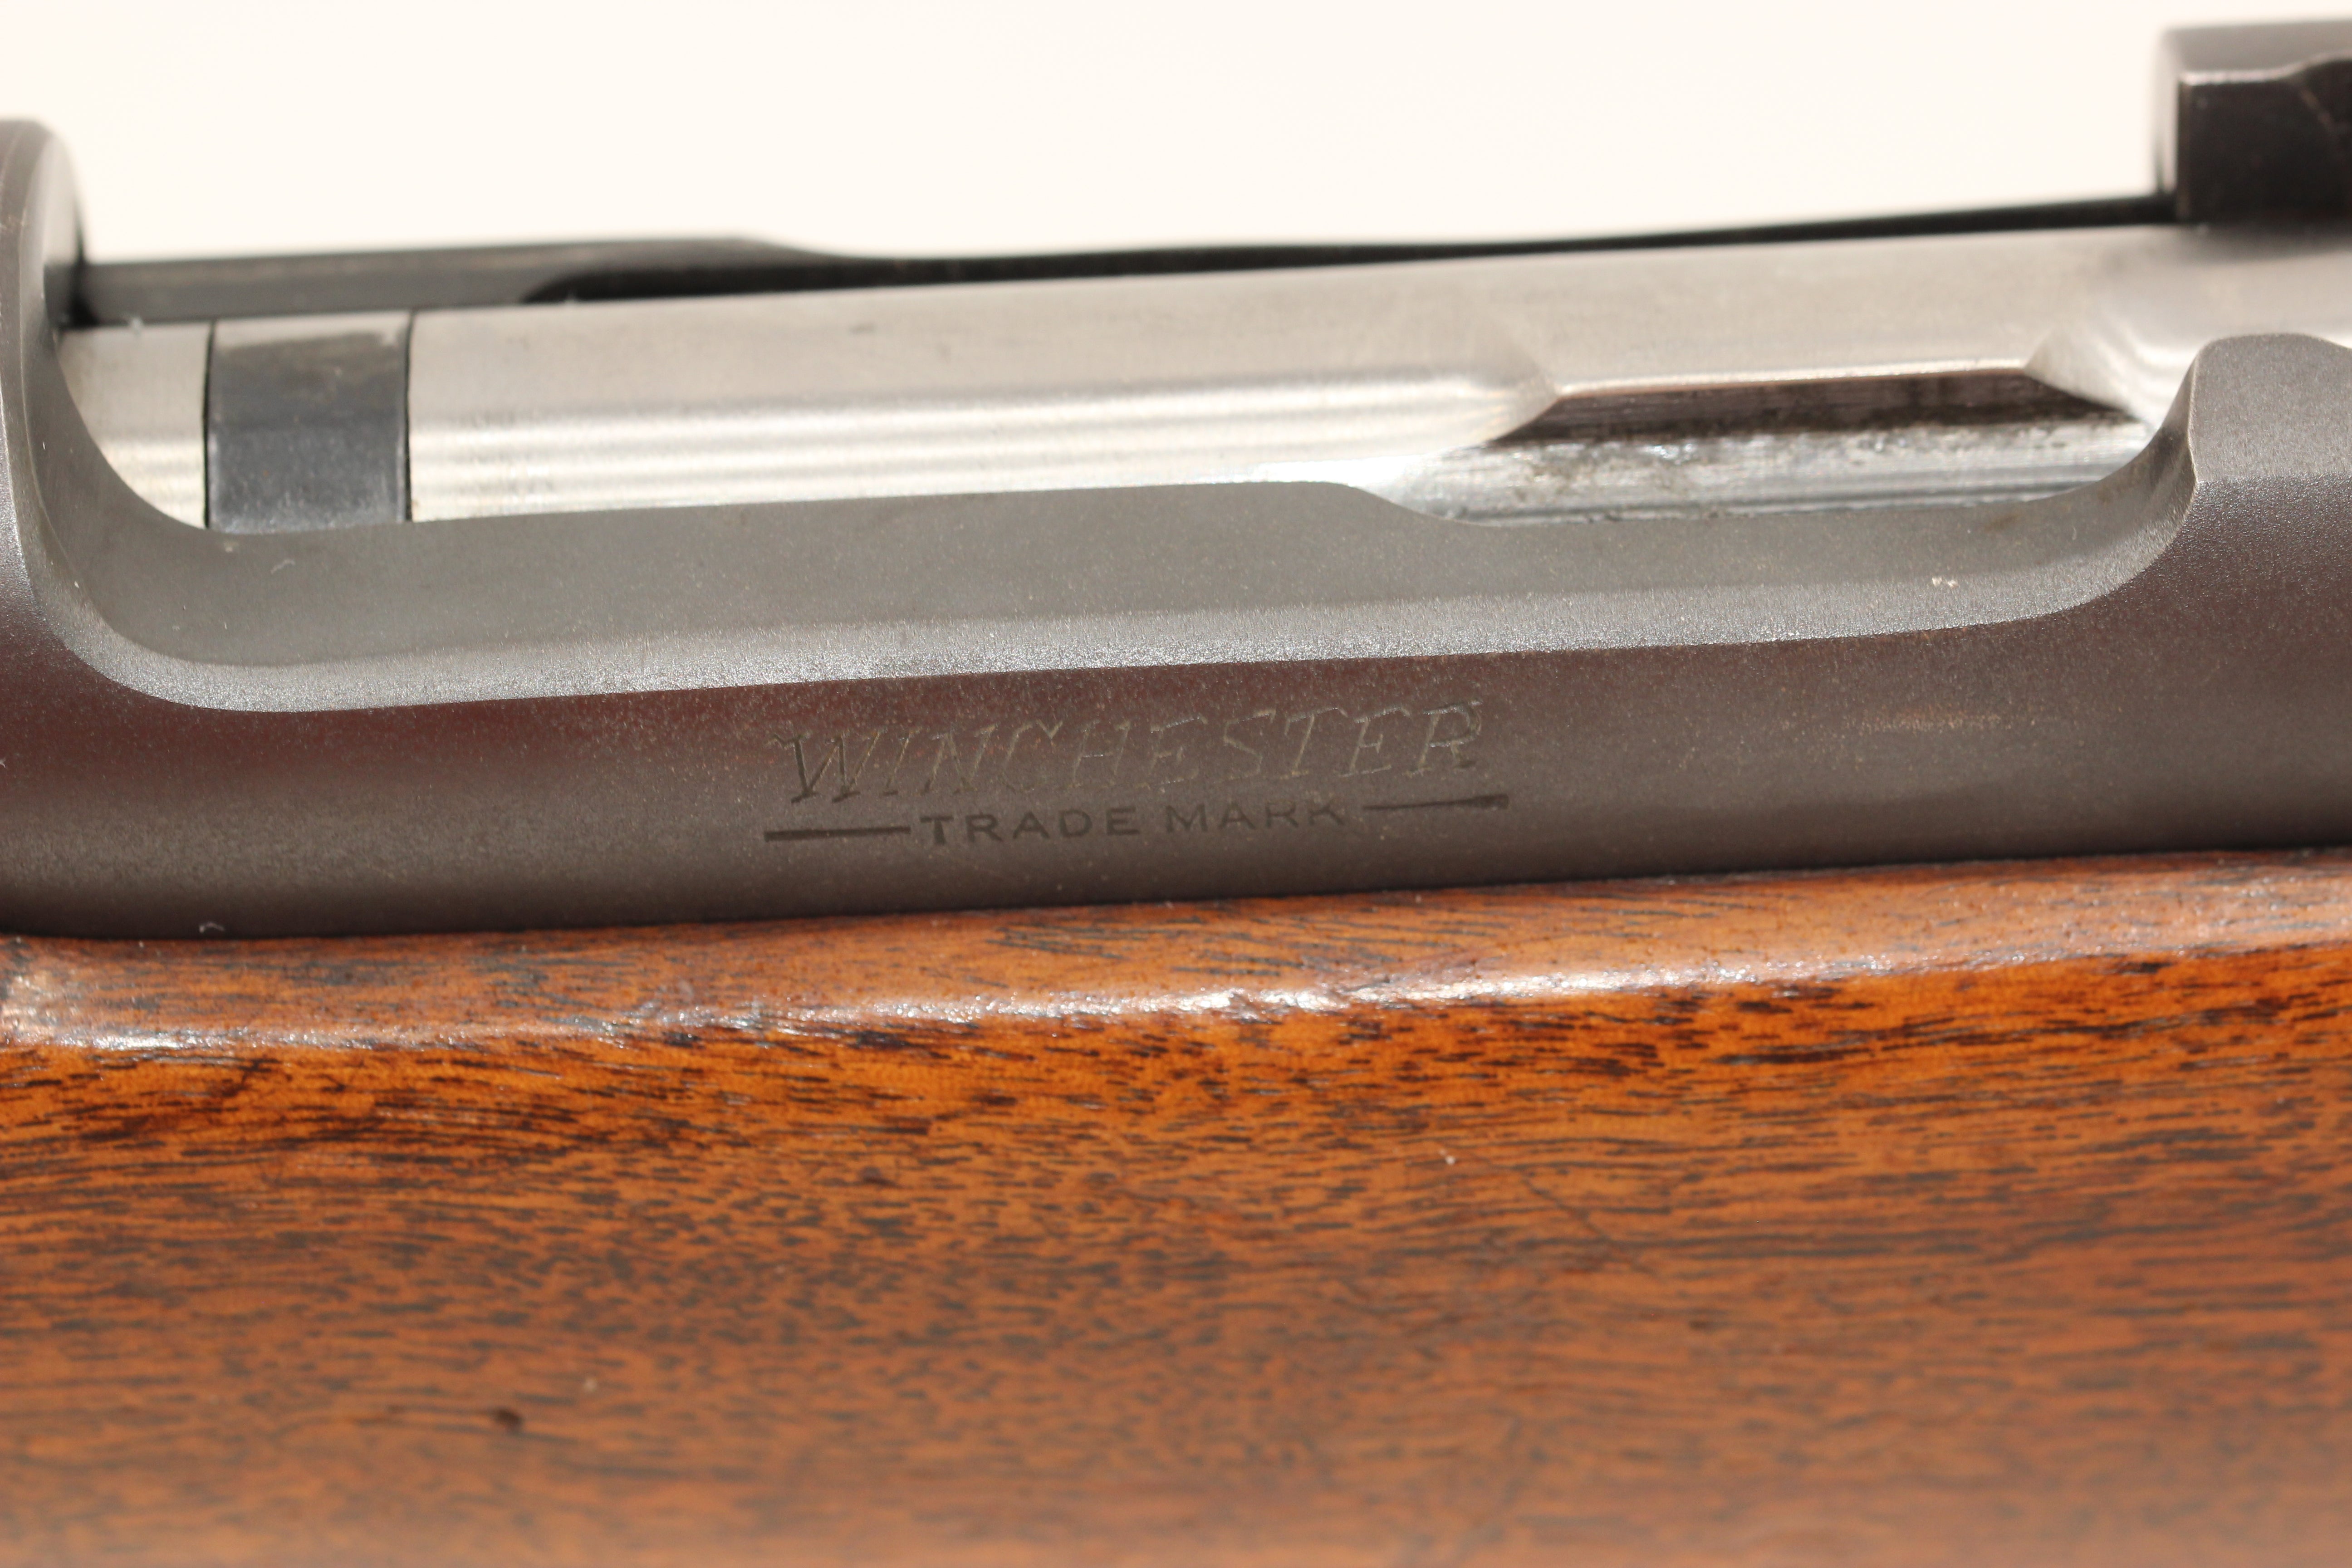 .257 Roberts Carbine - 1940